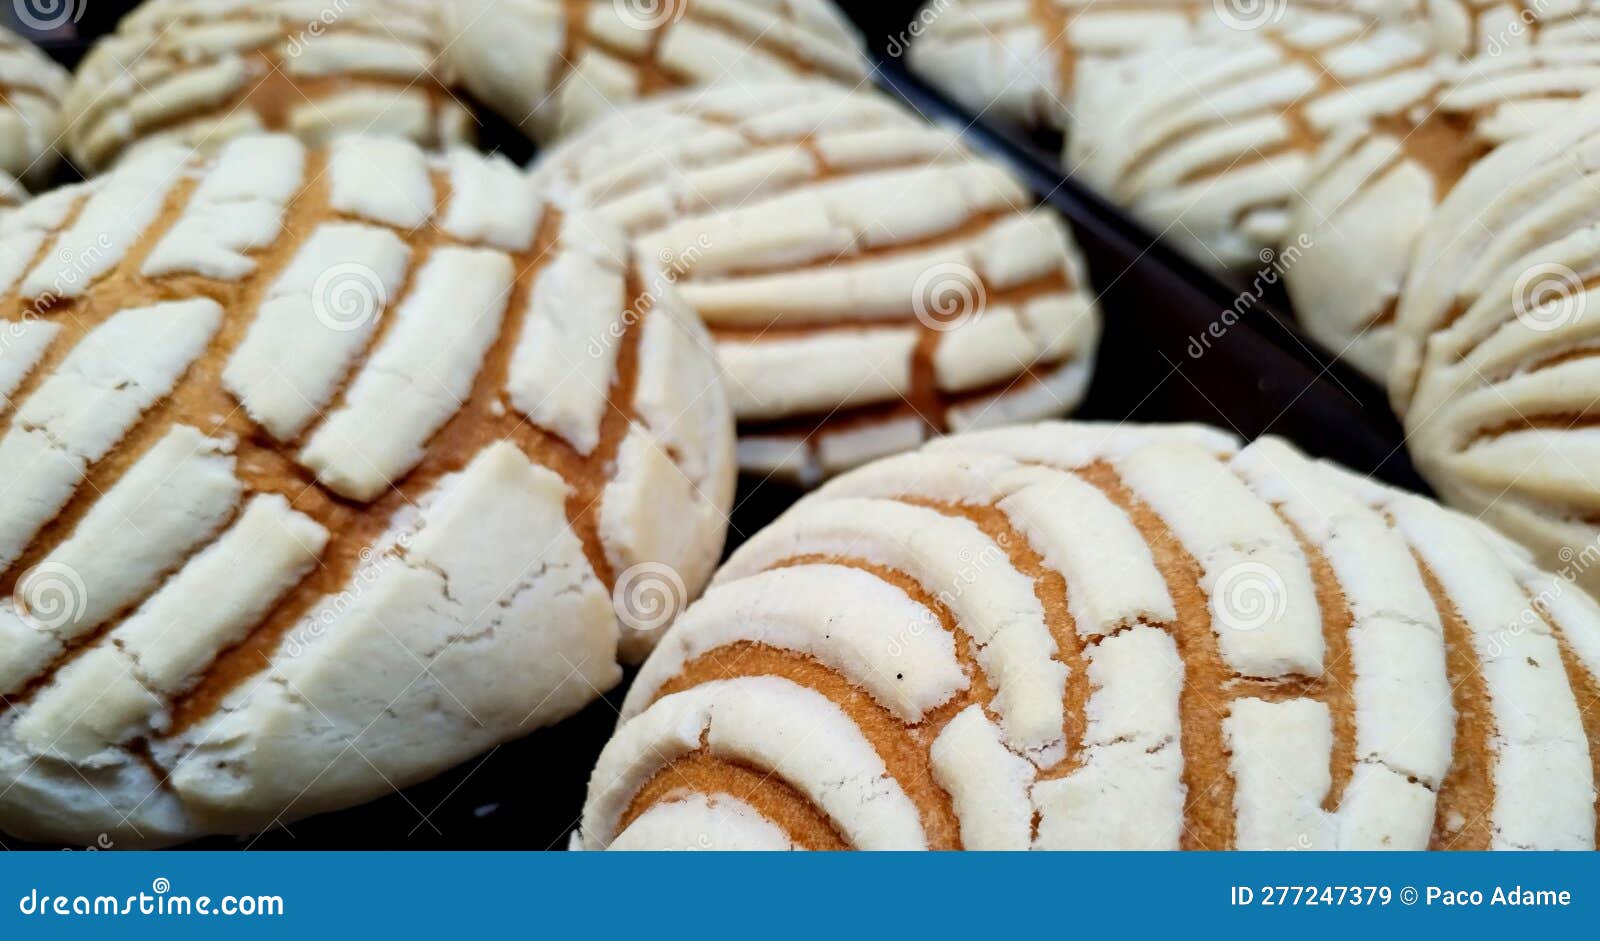 concha pan dulce mÃ©xico sweet bread of mexico